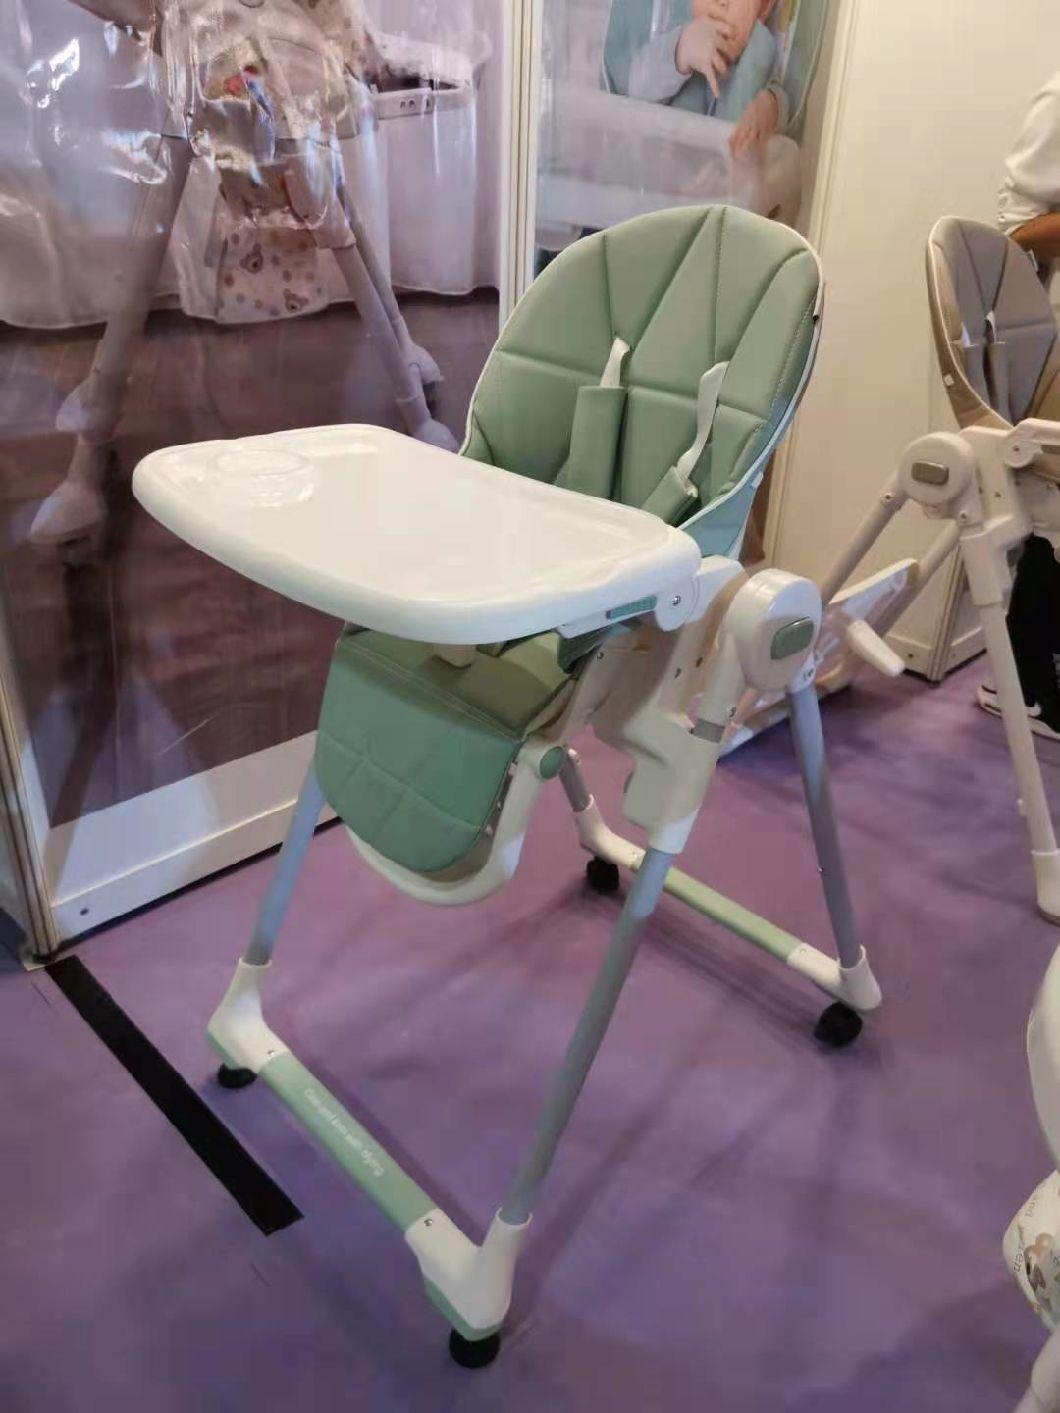 Modern Wooden Design Foldable Girl Boy Baby High Chair Footrest